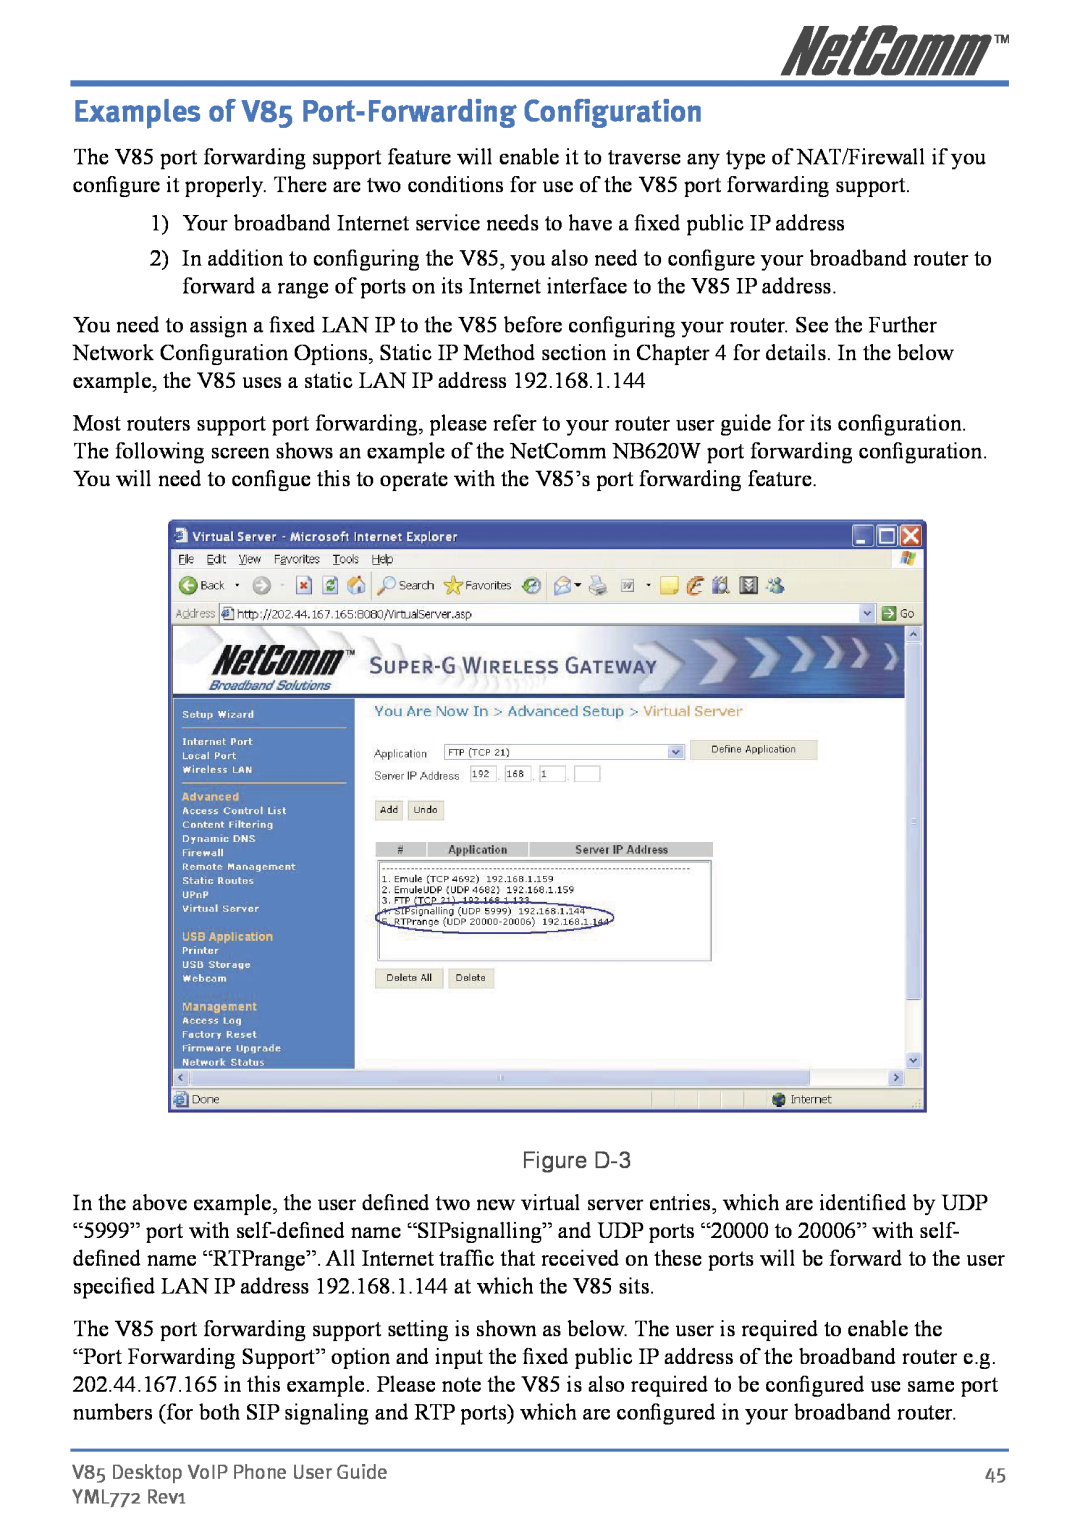 NetComm manual Examples of V85 Port-Forwarding Configuration, Figure D-3 